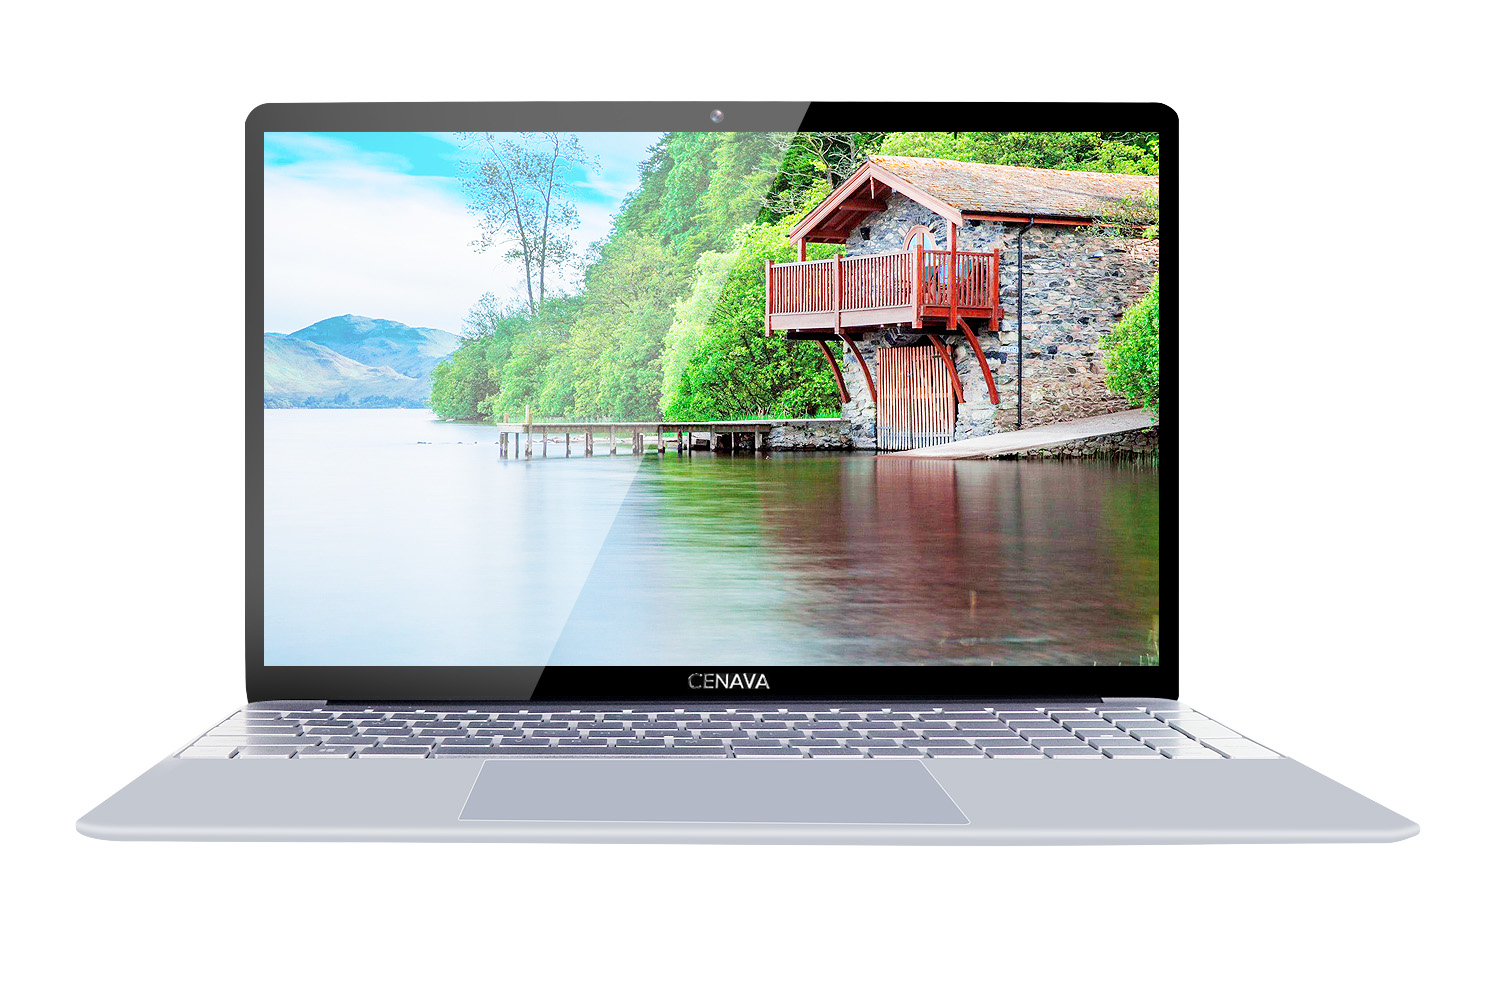 

CENAVA F151 Laptop15.6 inch Intel Core J3455 Intel HD Graphics 500 Win10 8G RAM 512GB SSD Notebook TN Screen